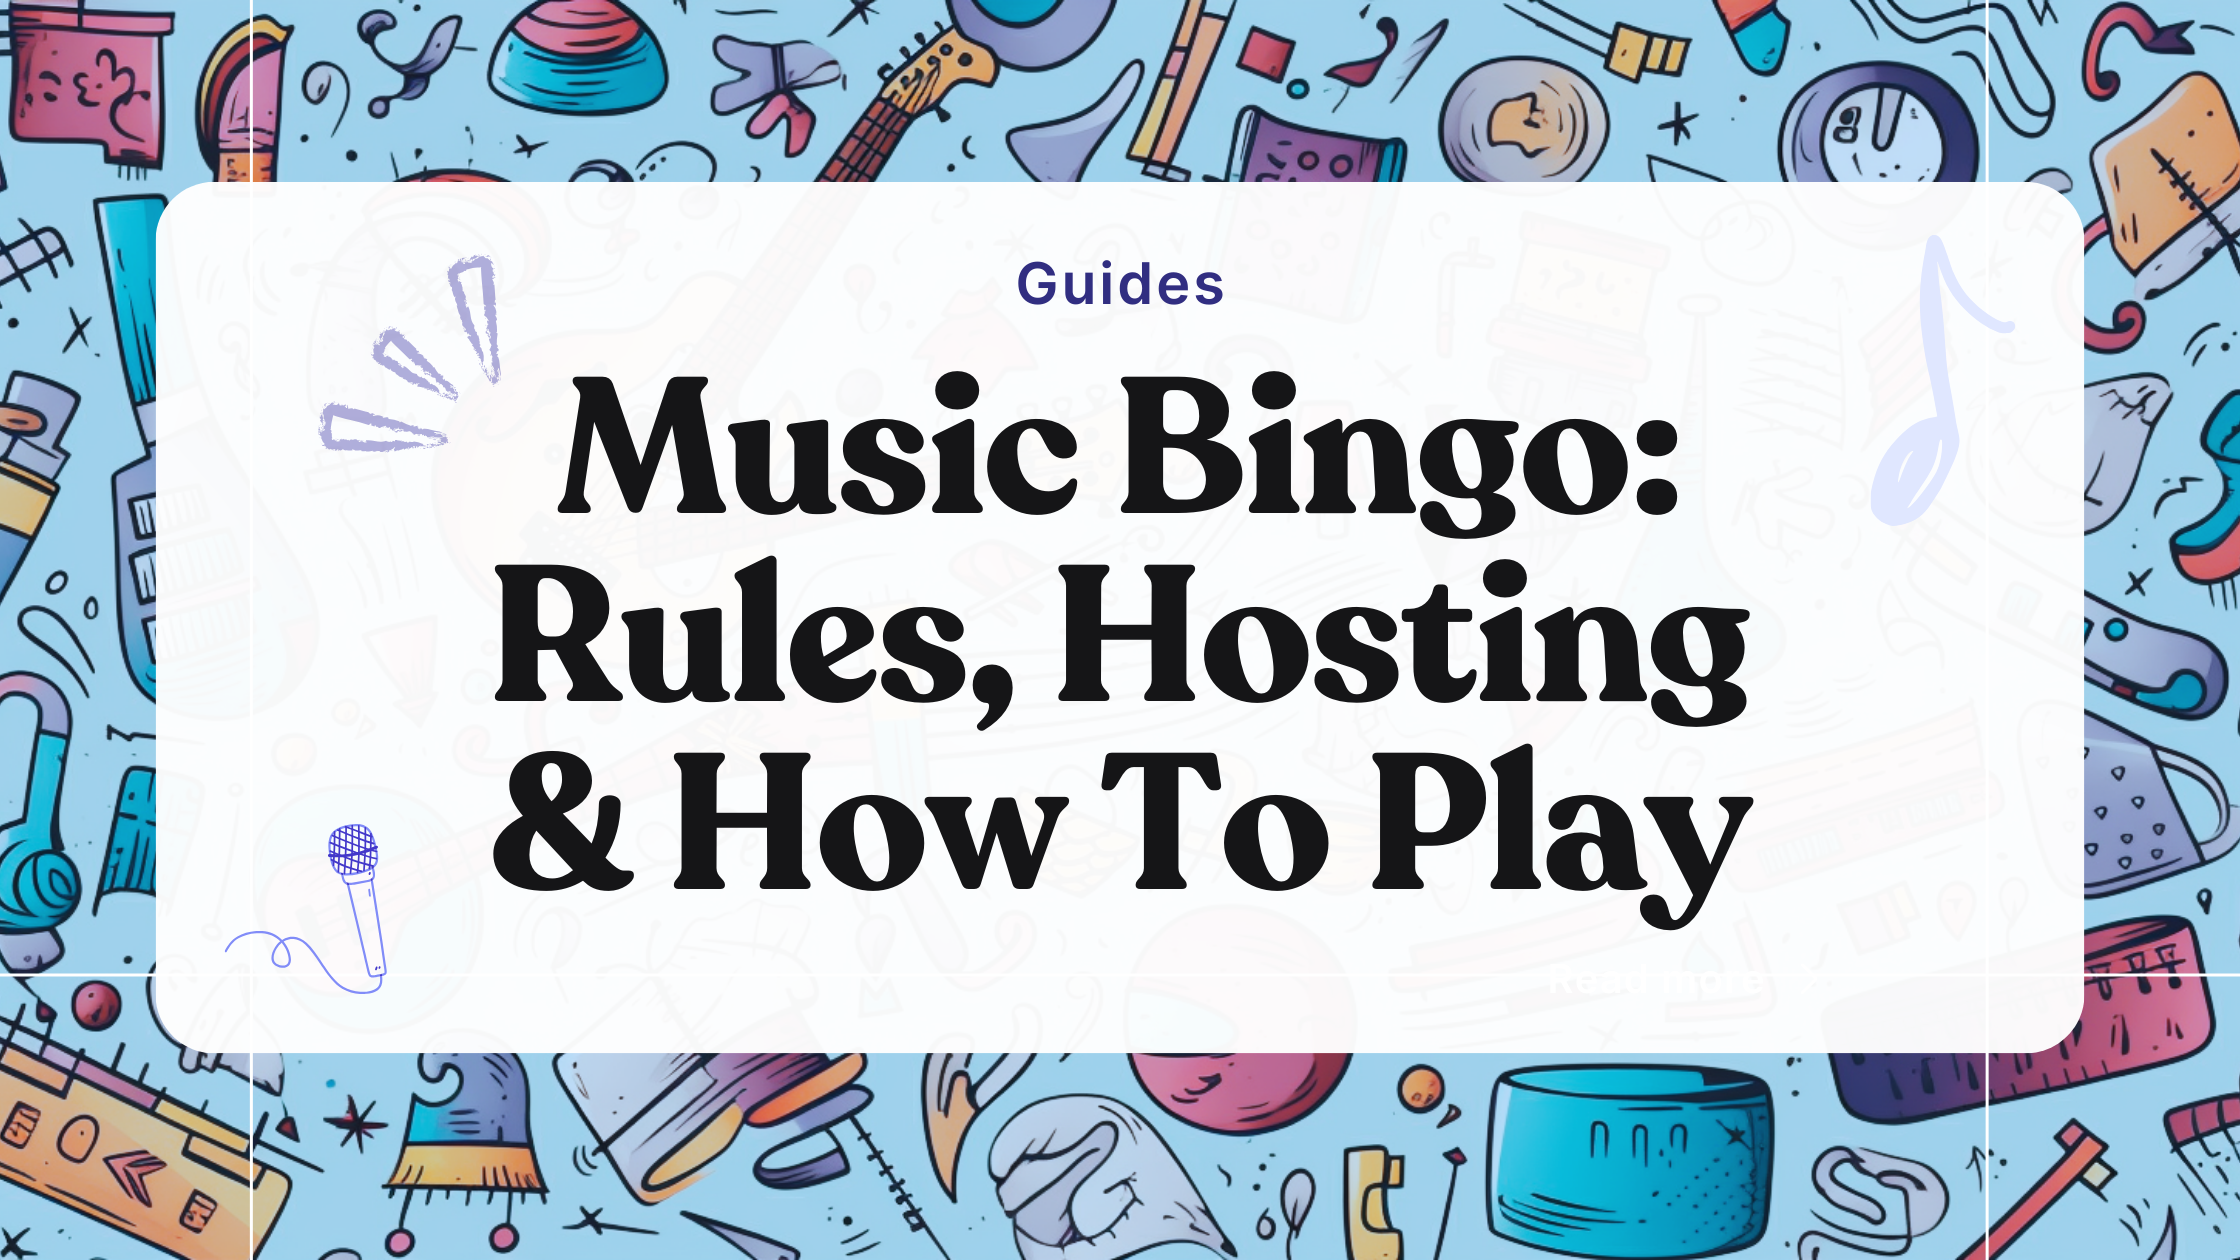 Music bingo: Rules, hosting & how to play